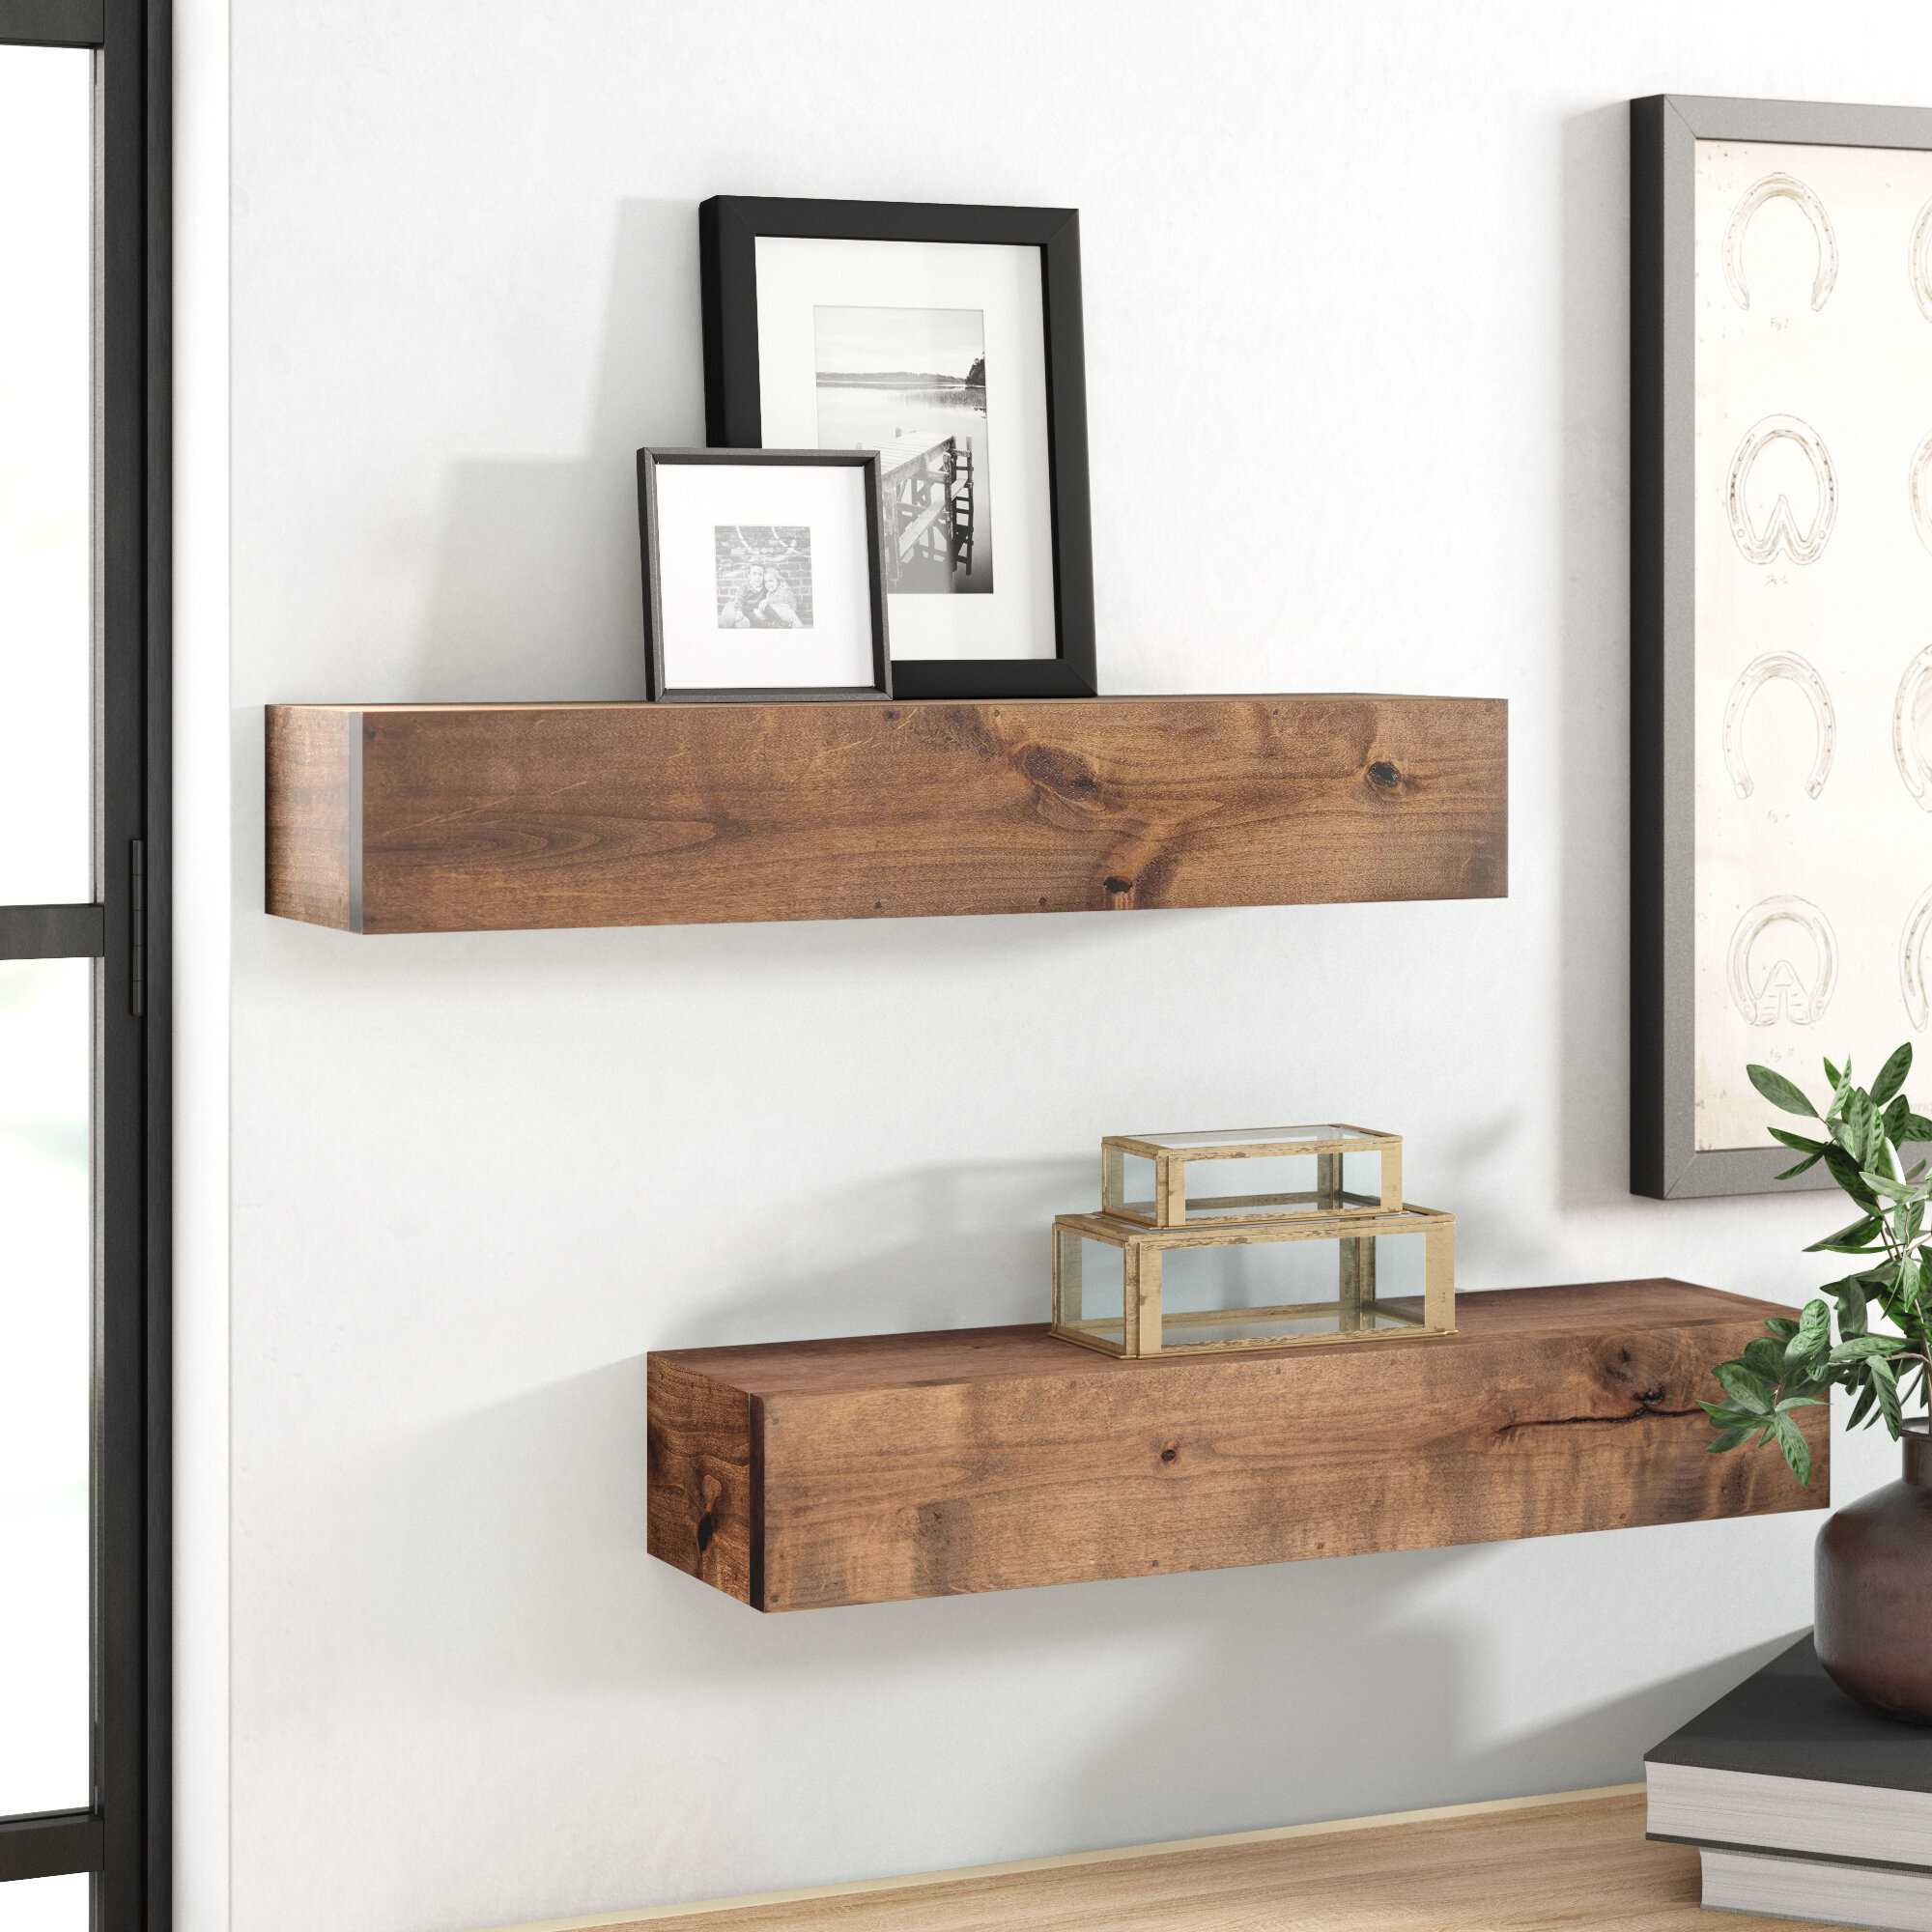 2 x Decorative Shelf Supports Wooden Brackets White or Beech 2 Sizes Round 